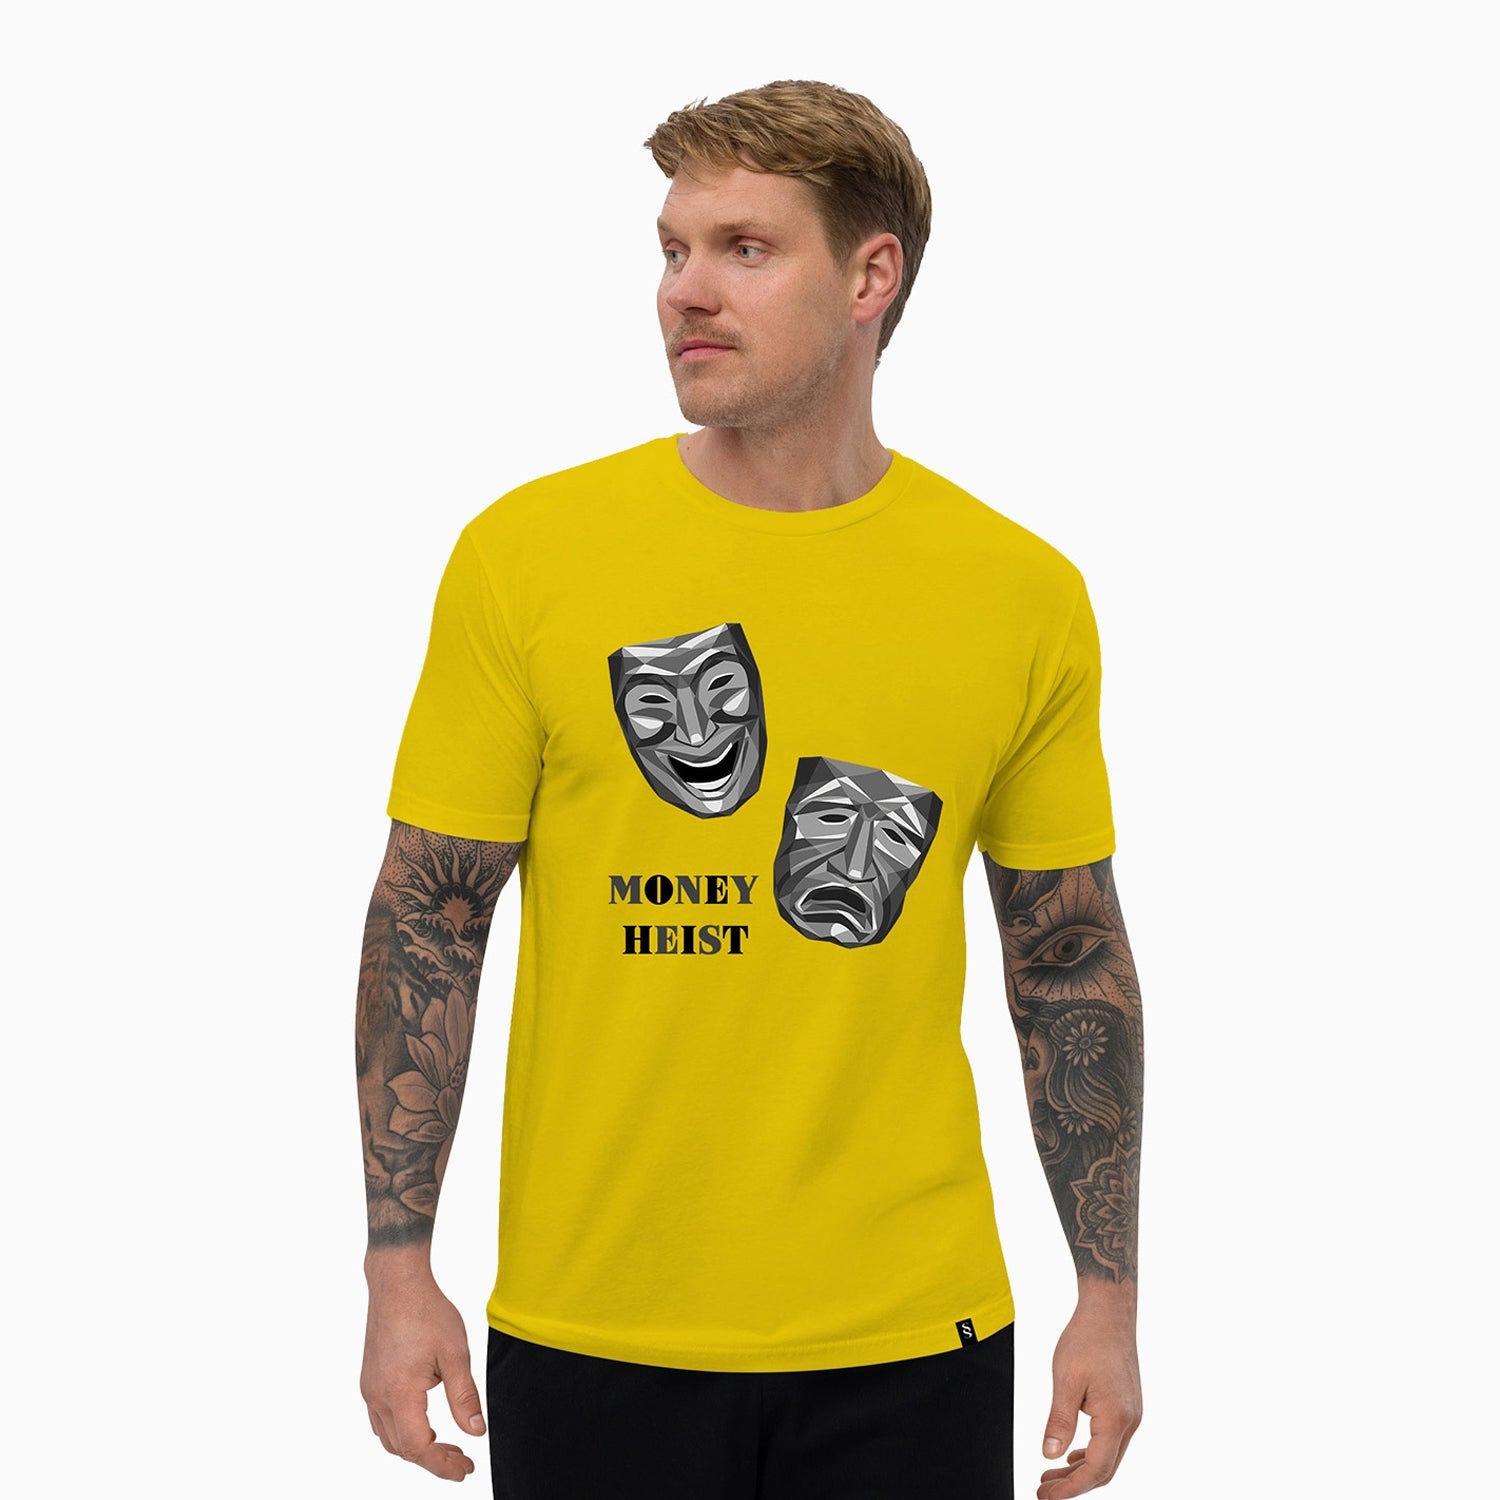 money-heist-design-printed-crew-neck-yellow-t-shirt-for-men-st108-728